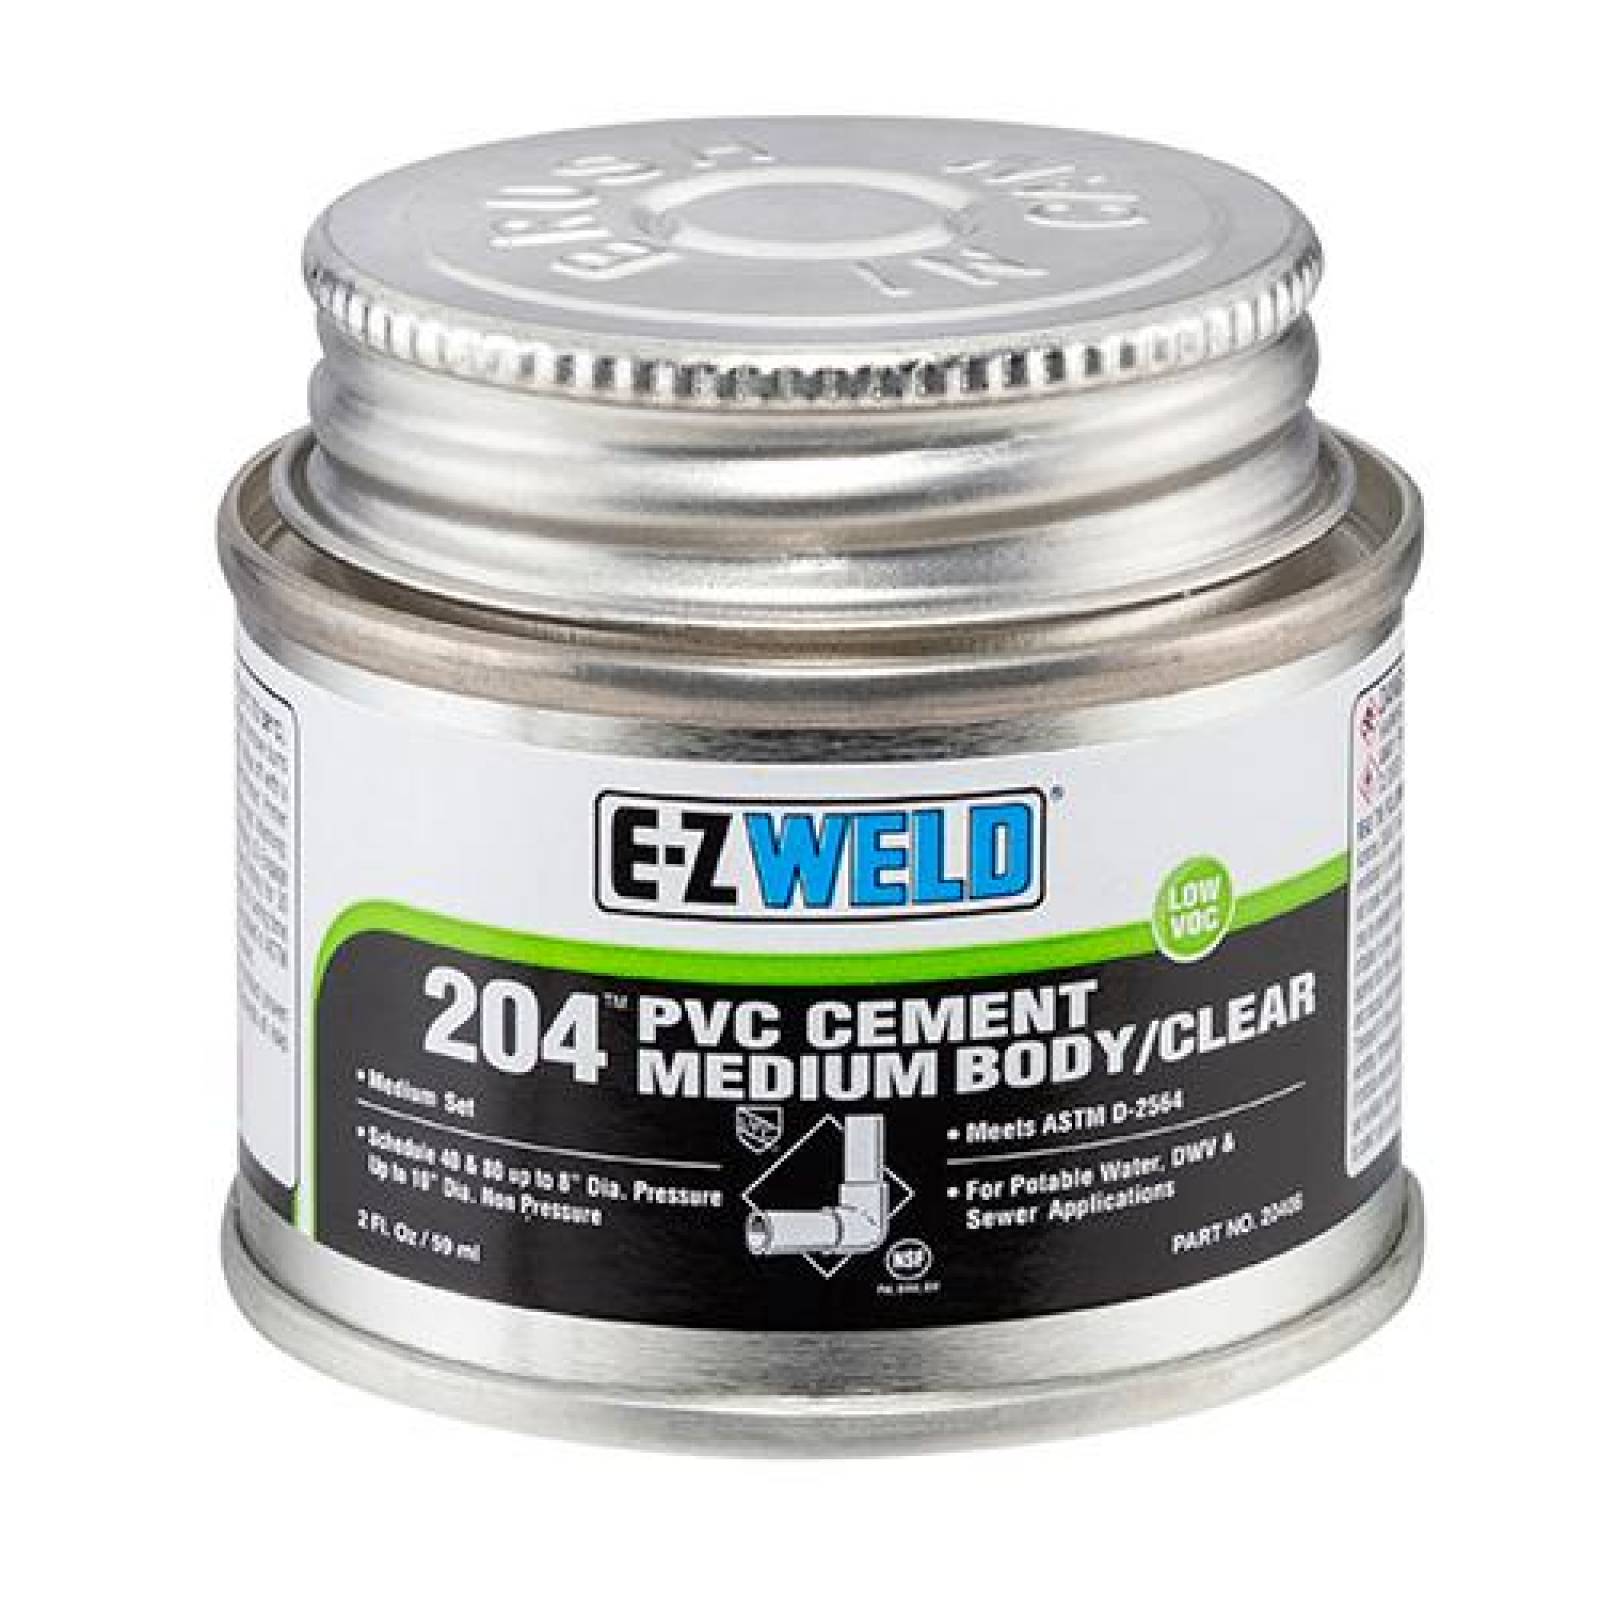 Cemento PVC C80, mod. 204 azul, E-Z WELD 120ml 